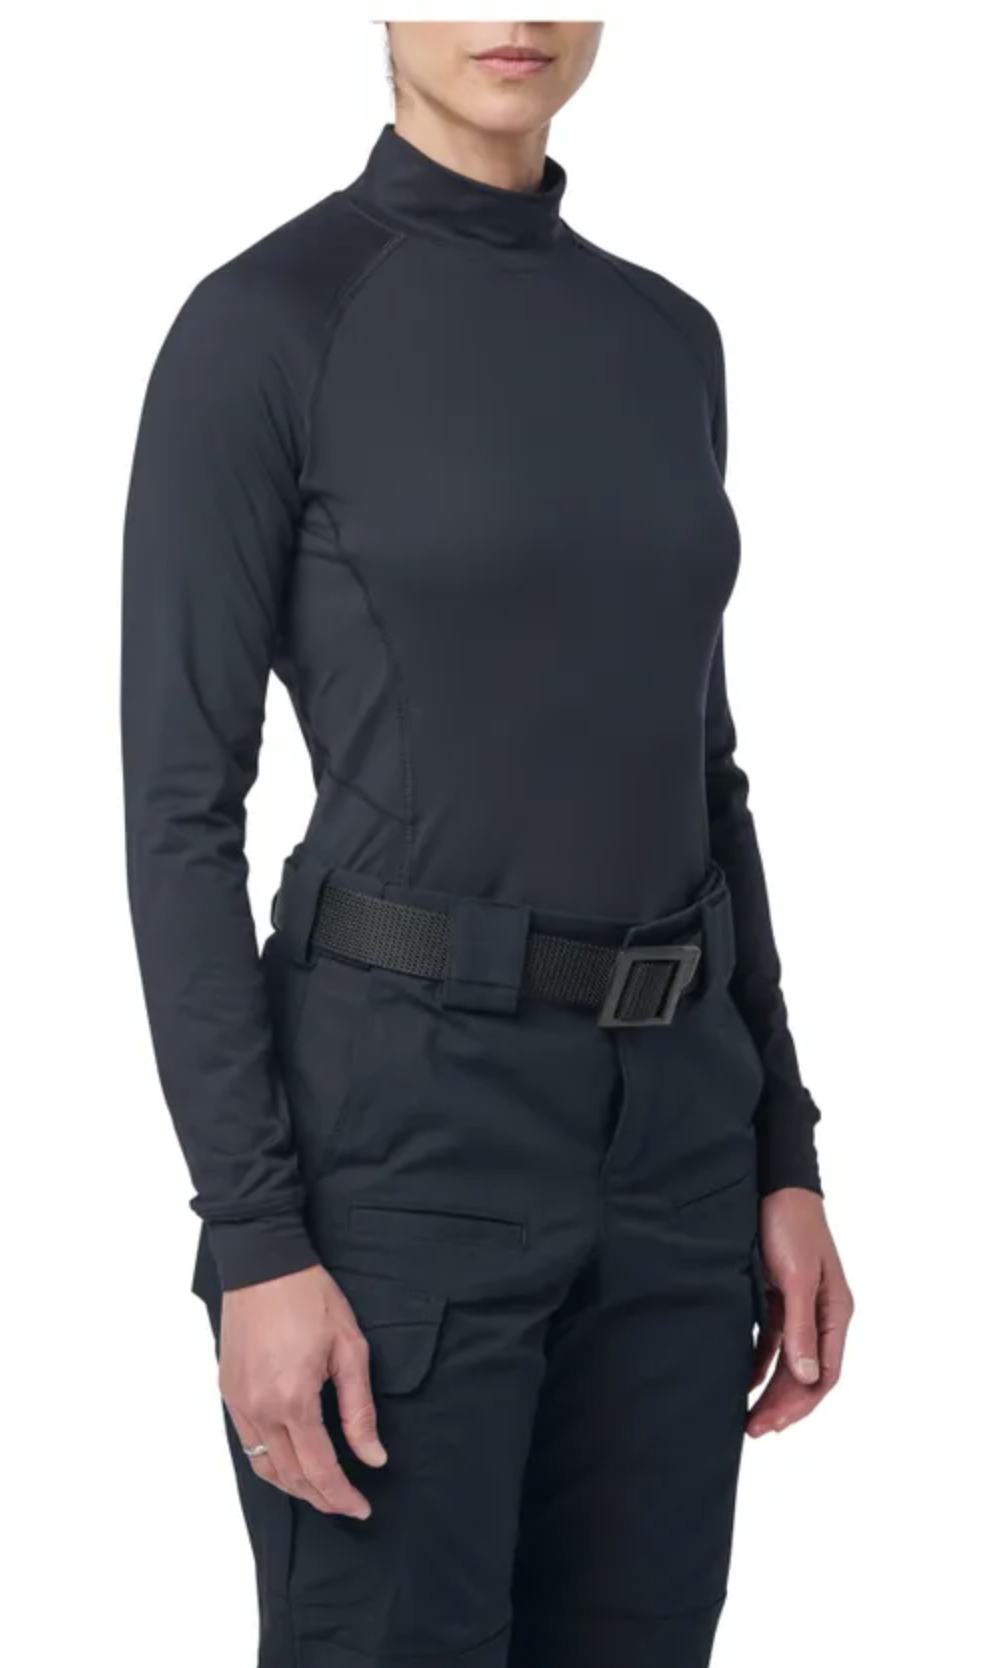 5.11 - Women's Mock Neck Long Sleeve Top - Midnight Navy (750)